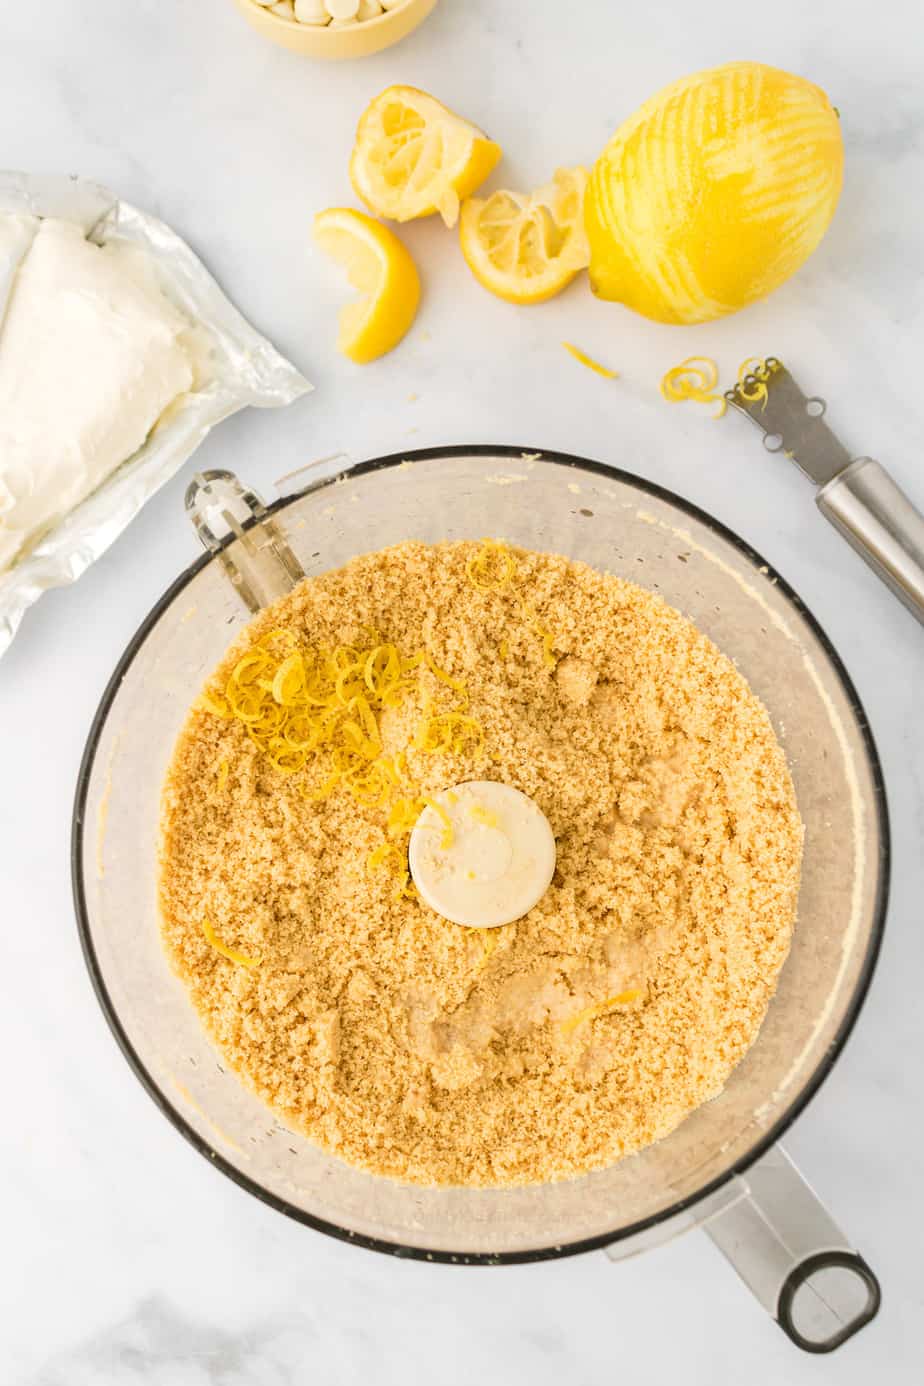 Mixing lemon juice and zest with Golden Oreo crumbs in food processor